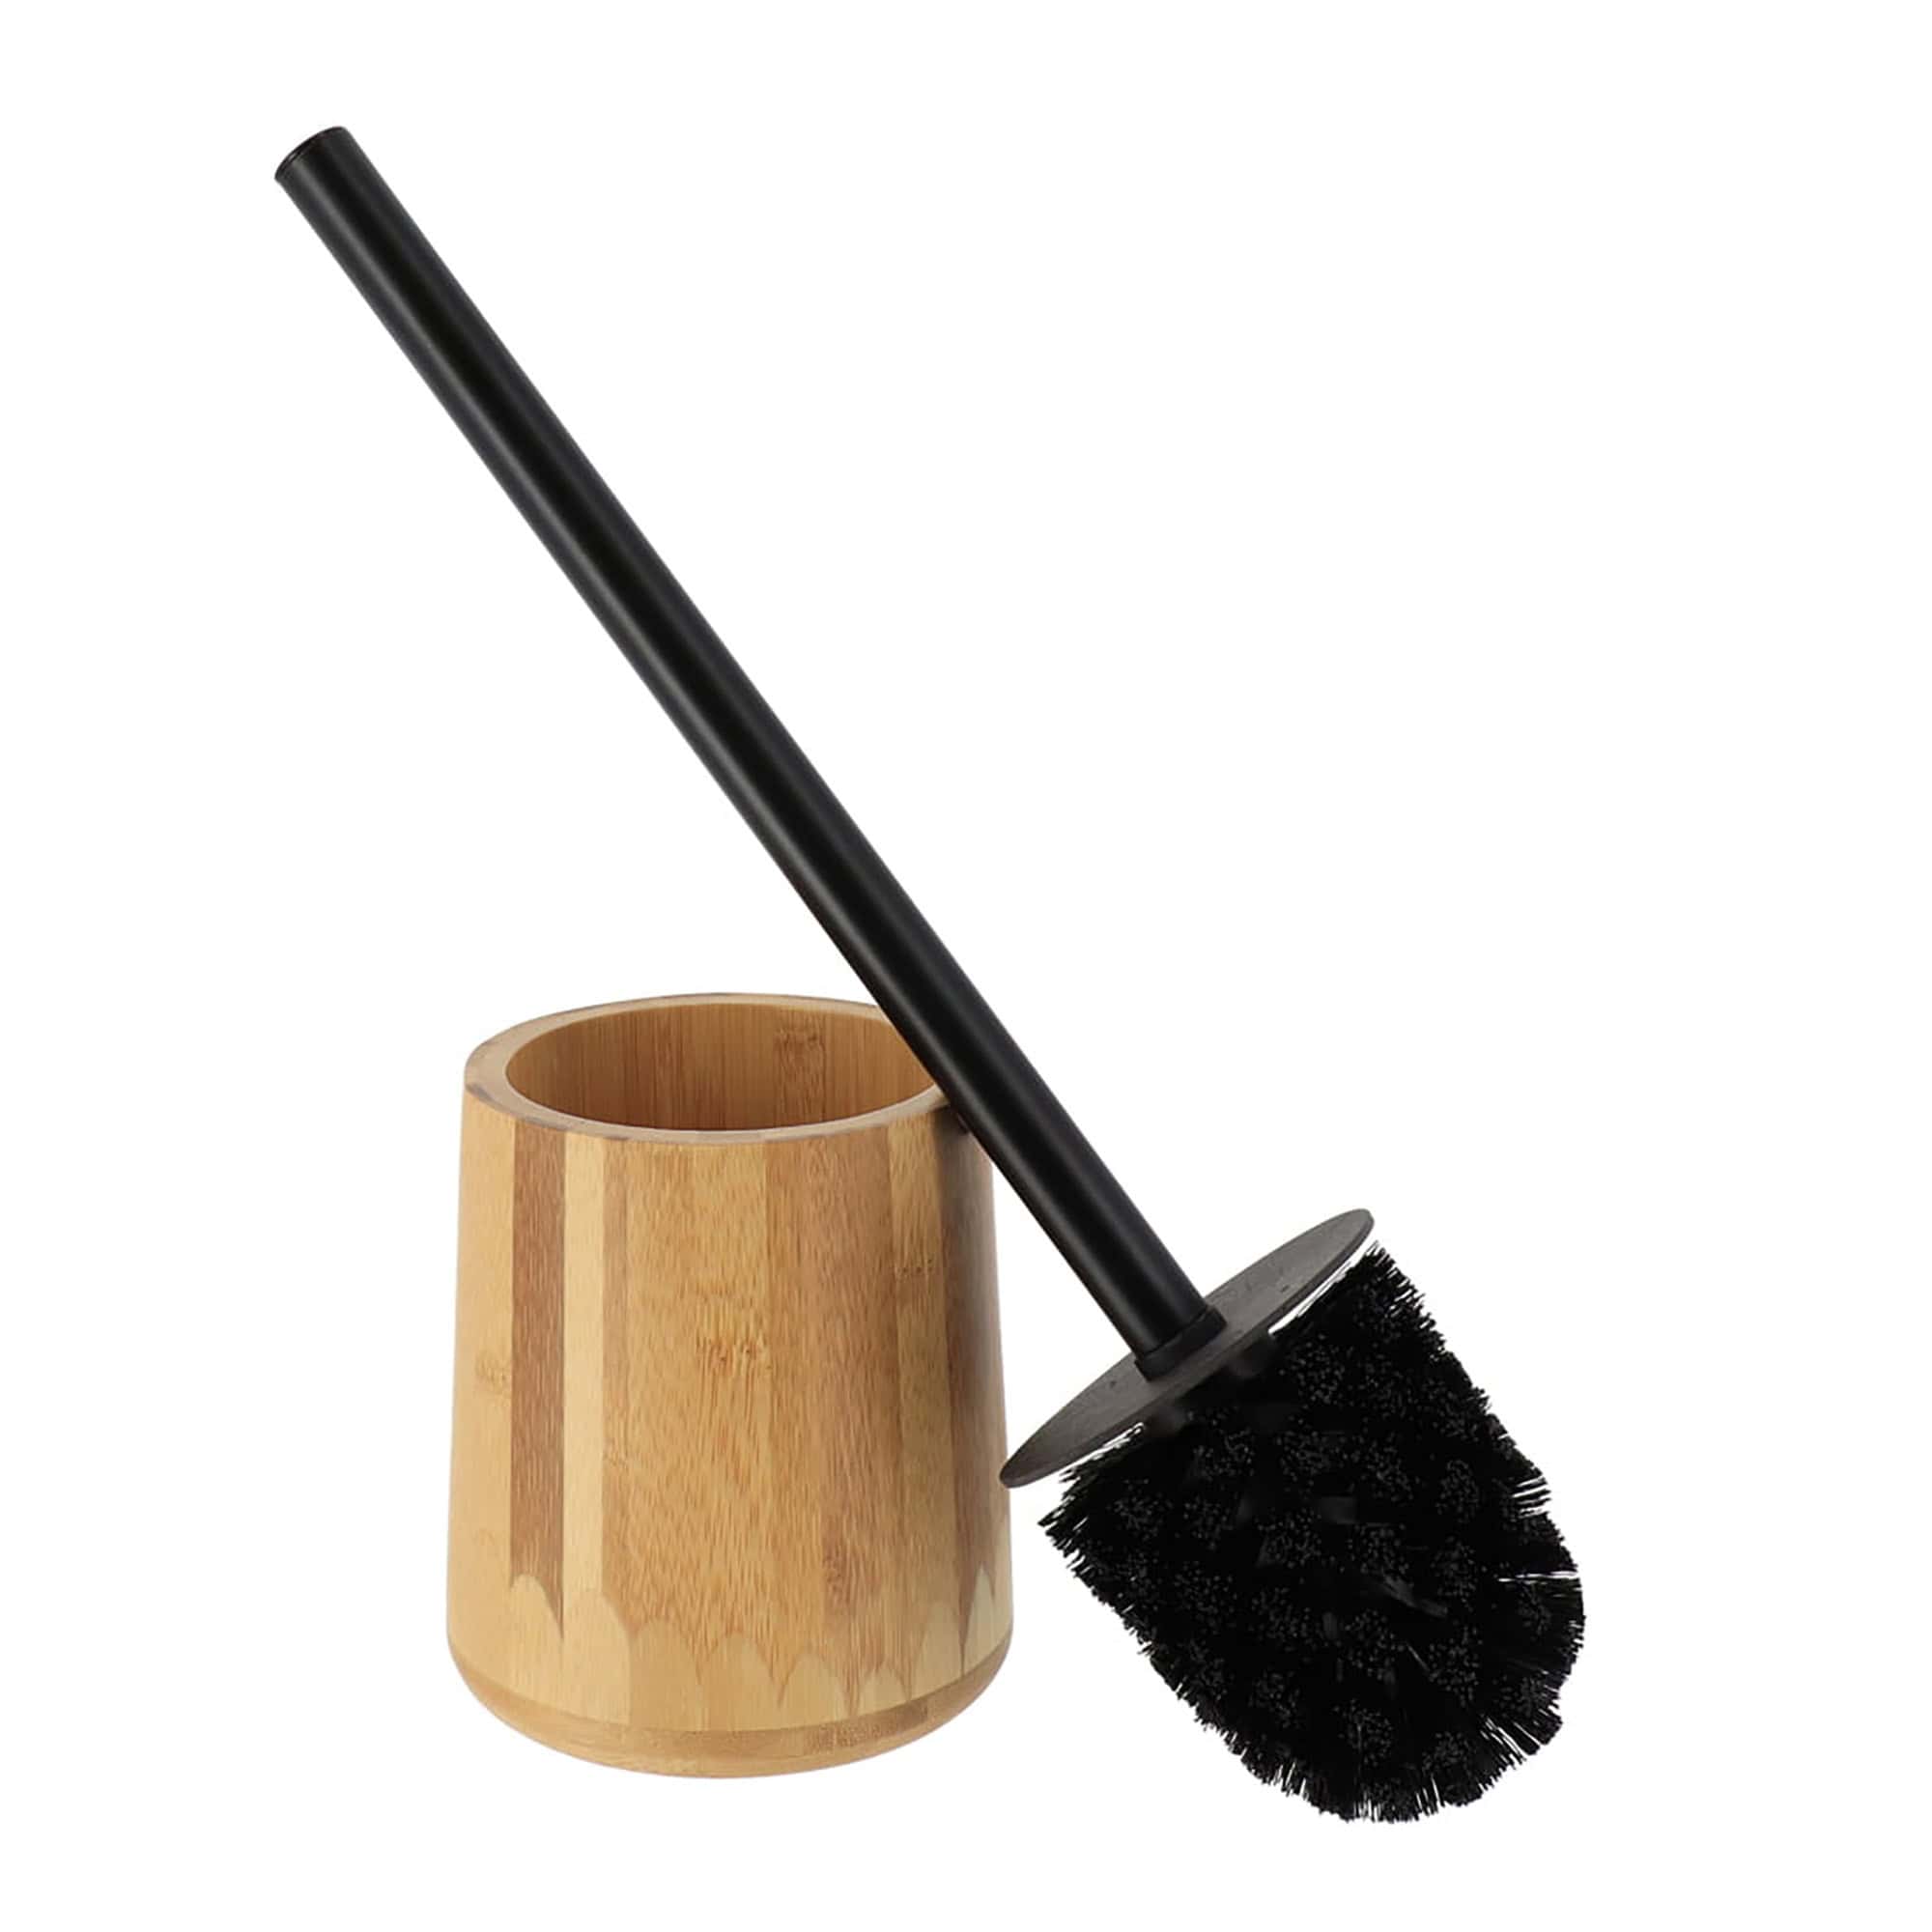 Toilet bowl brush in natural bamboo, black handle and brush